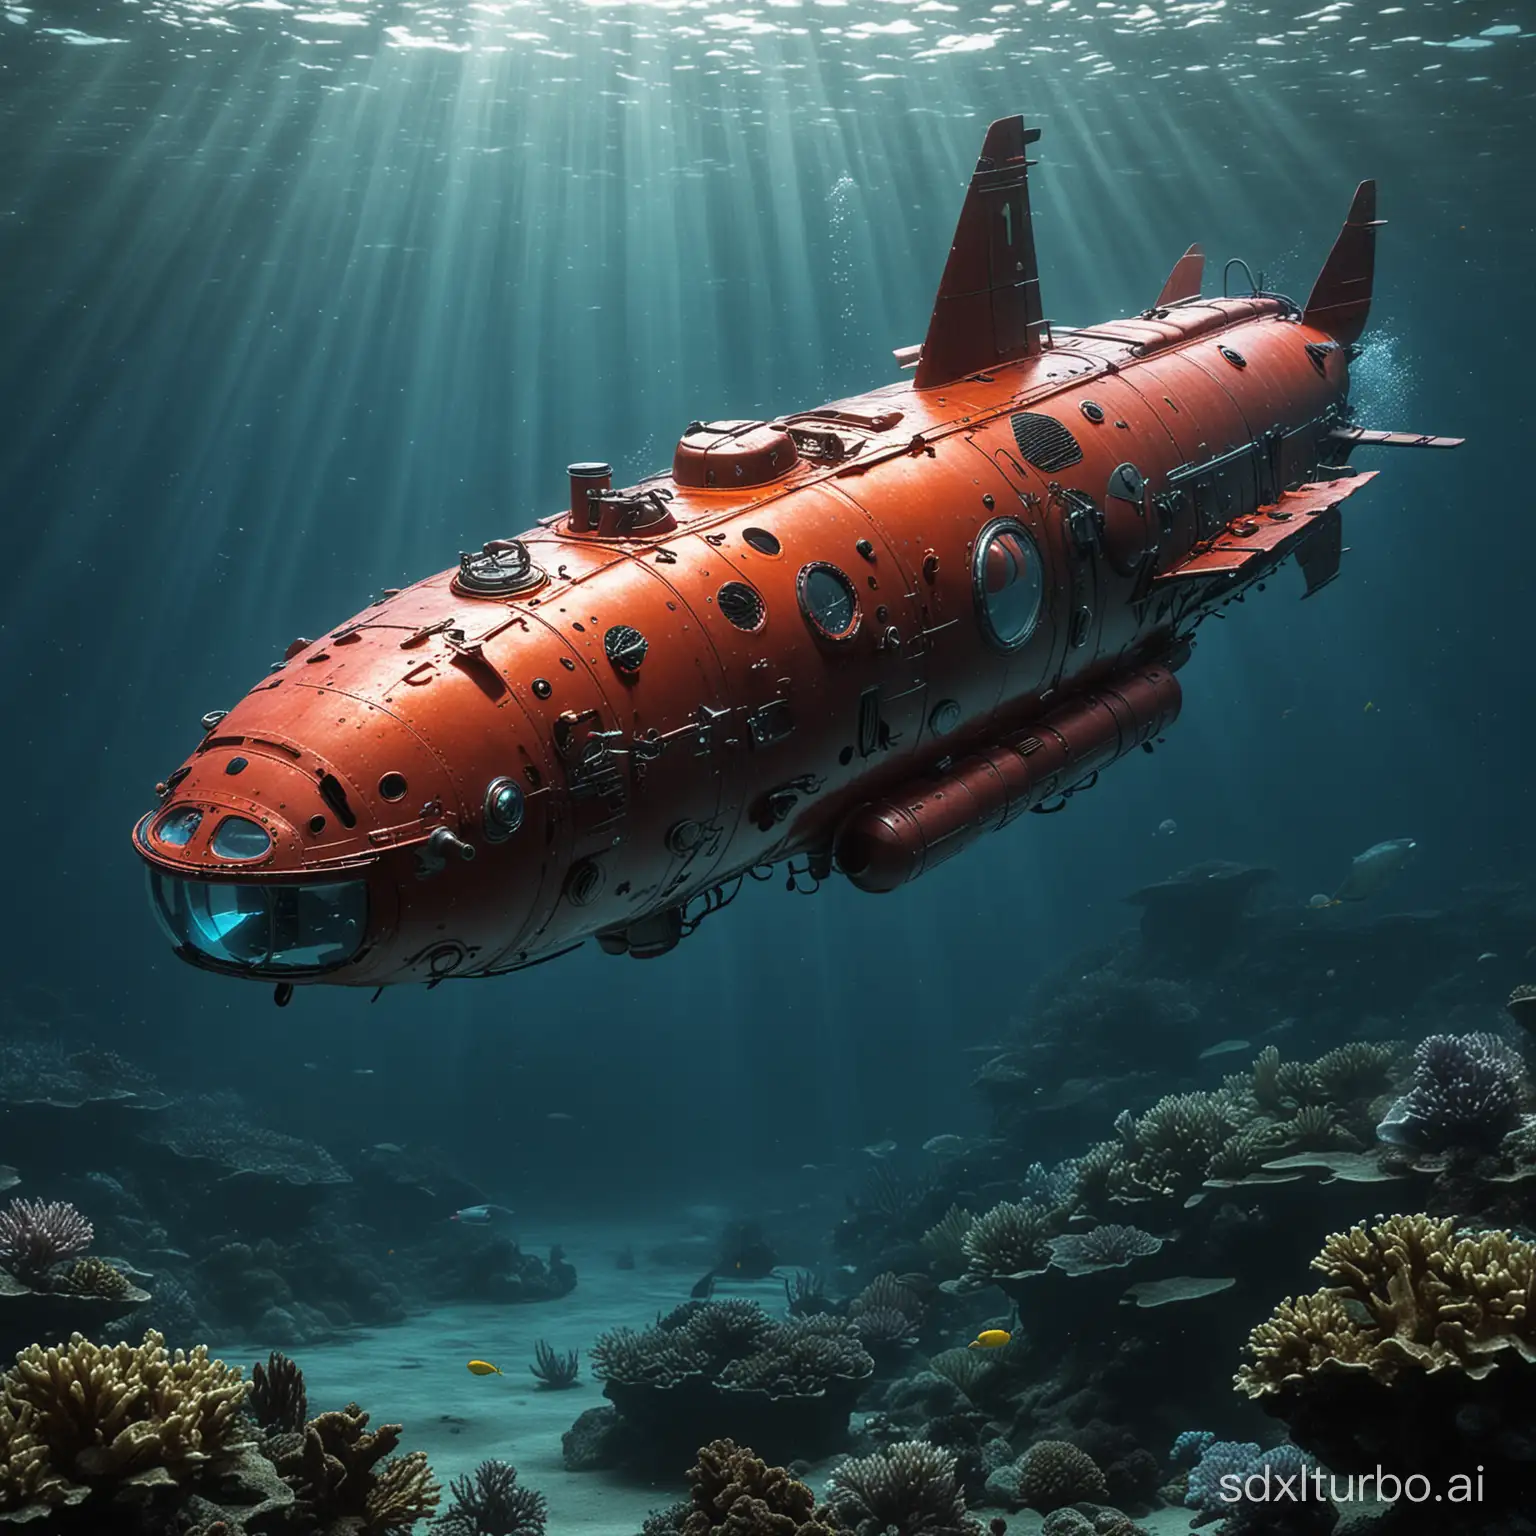 Dragon submersible